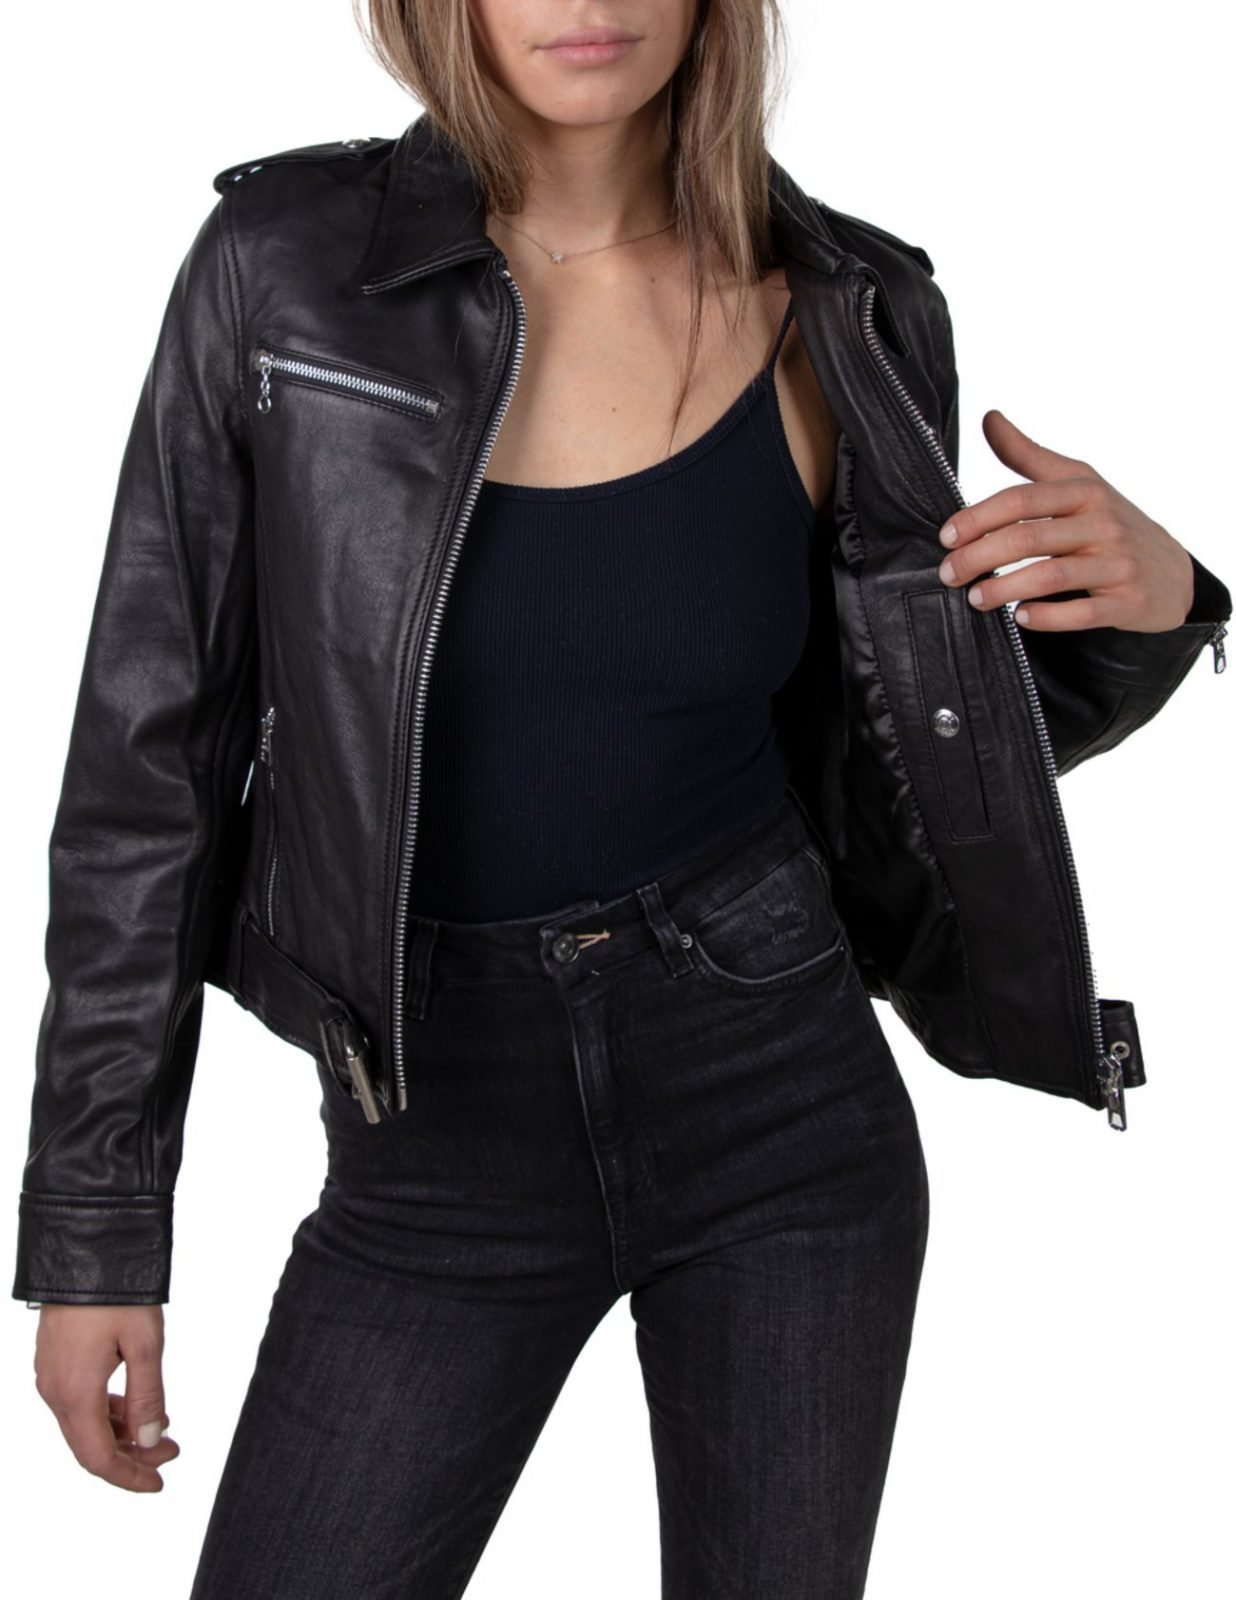 Ovia Sheep Leather Jacket | Best Quality Genuine Leather Jackets for ...